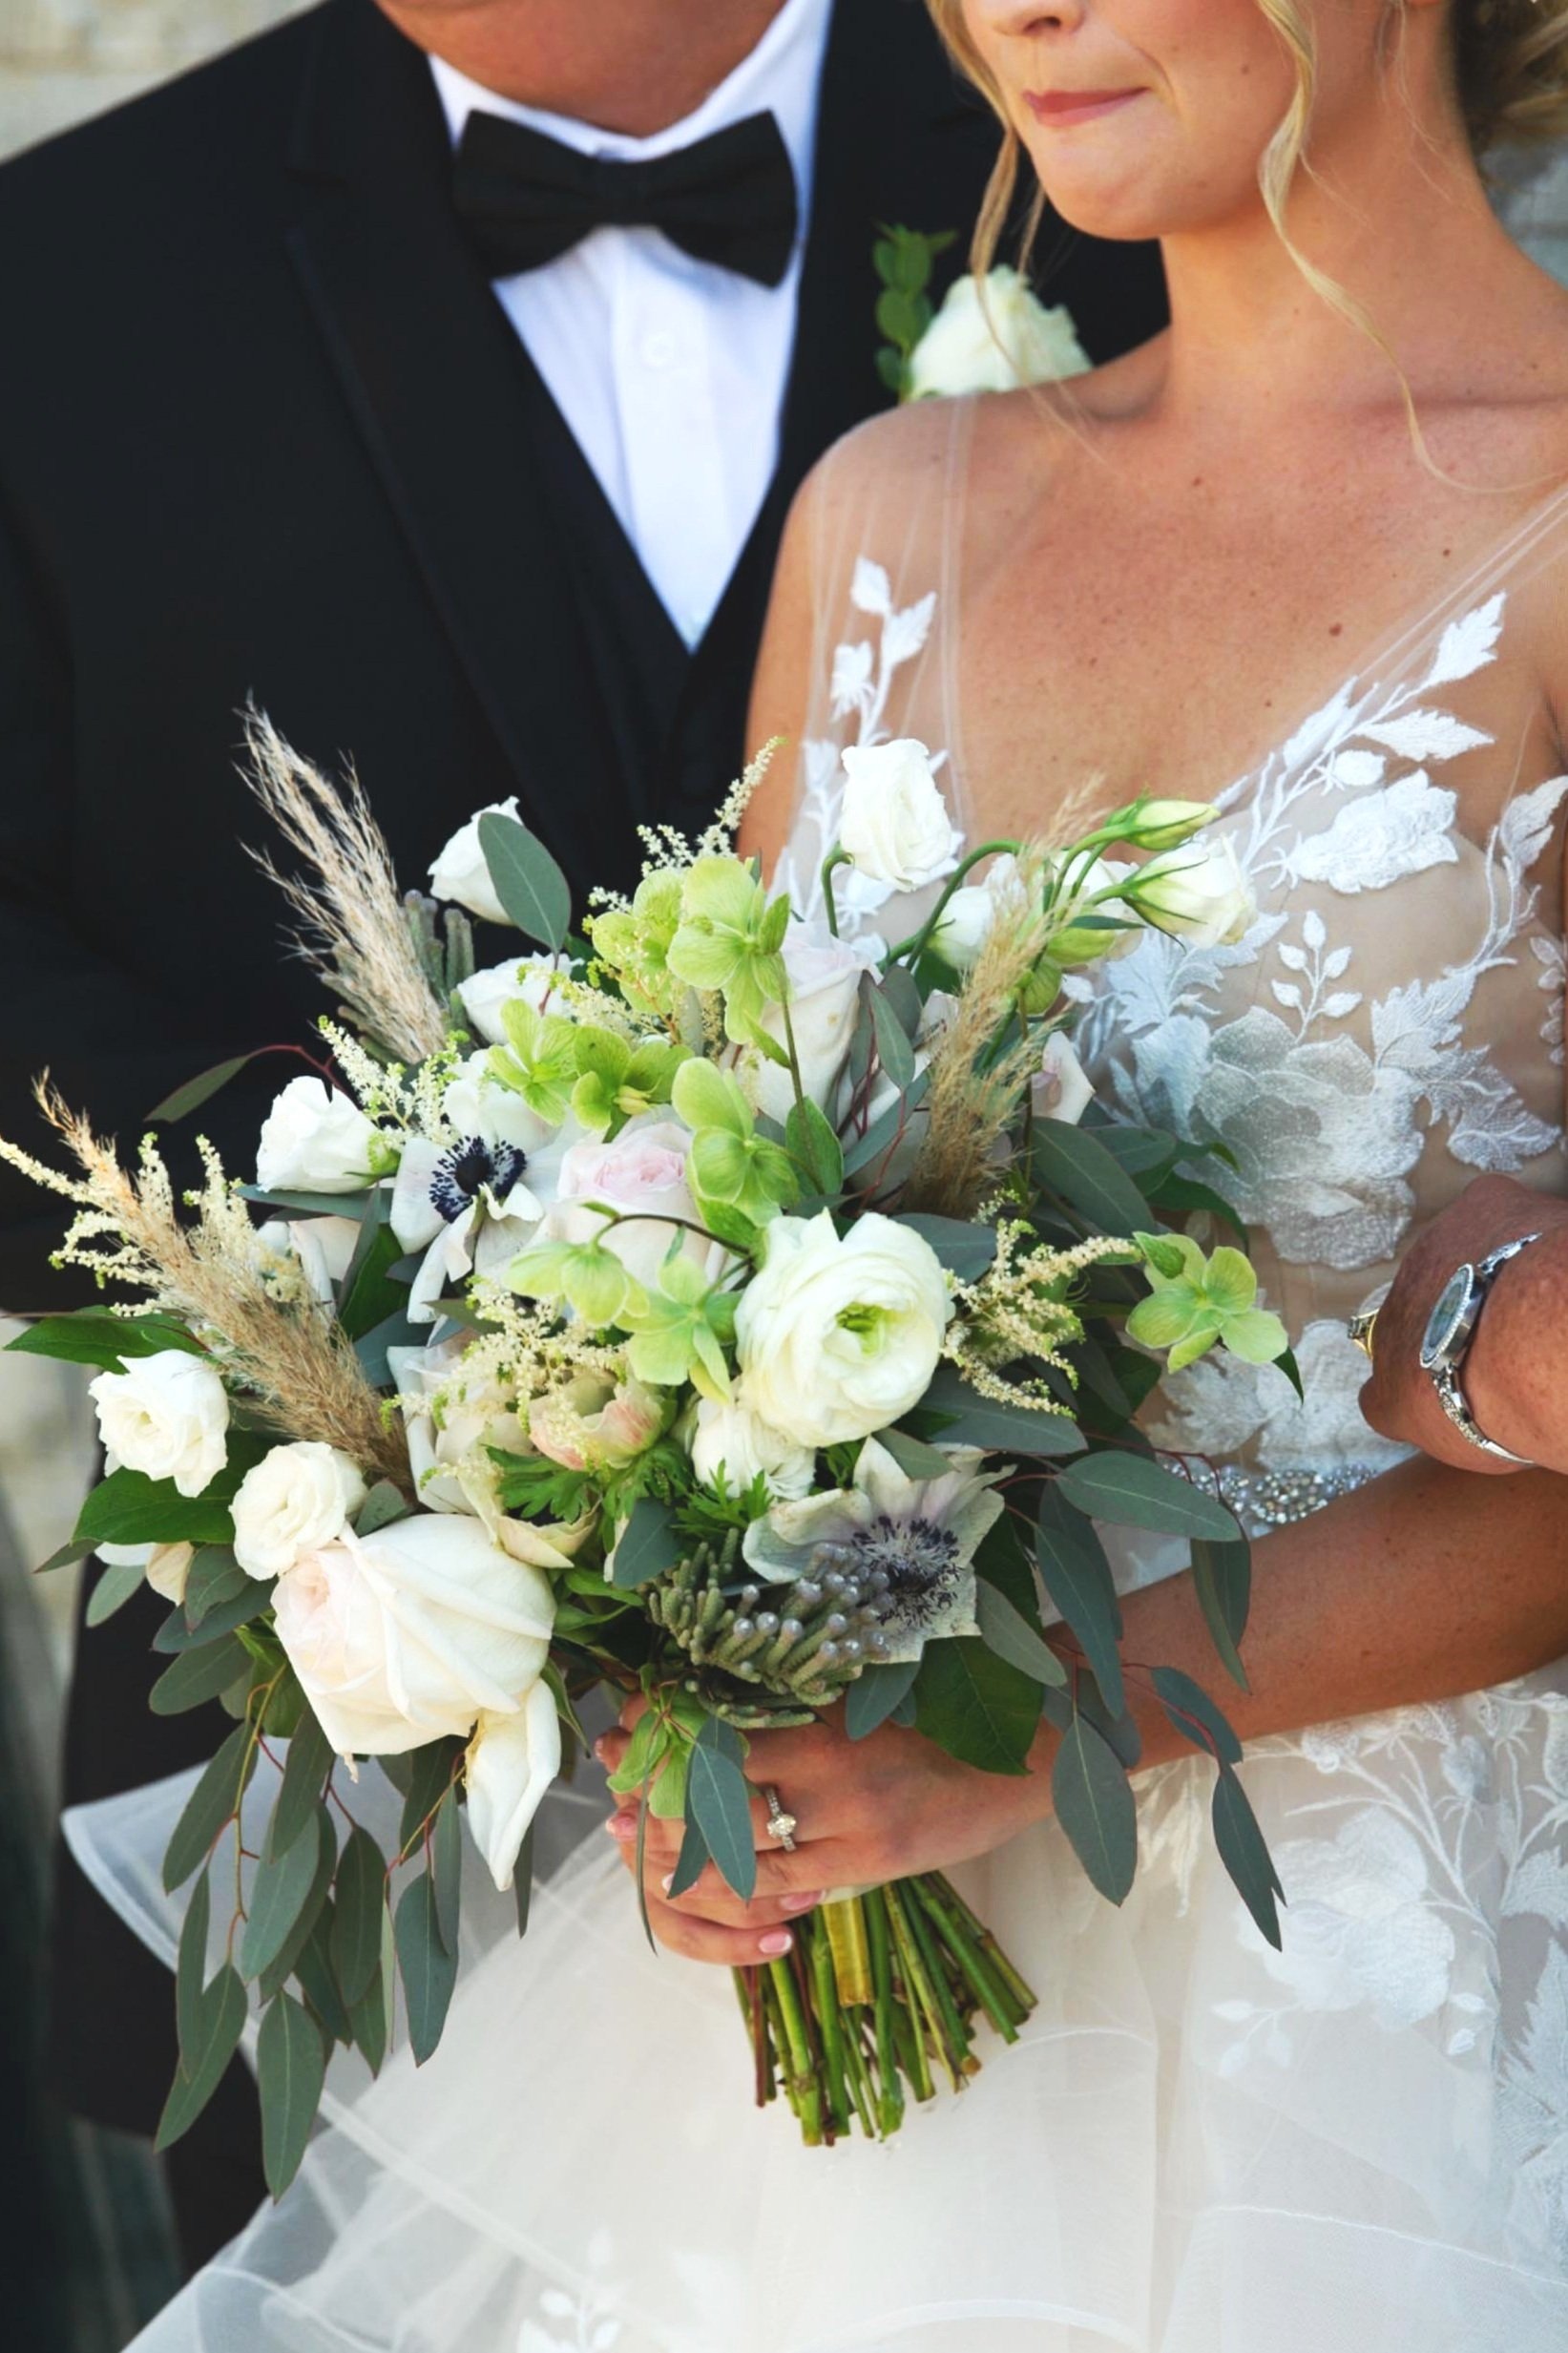 hengstenbergs-florist-weddings-love-story-kyra-michael-%25C2%25A9SilverfoxStudios-001.jpg